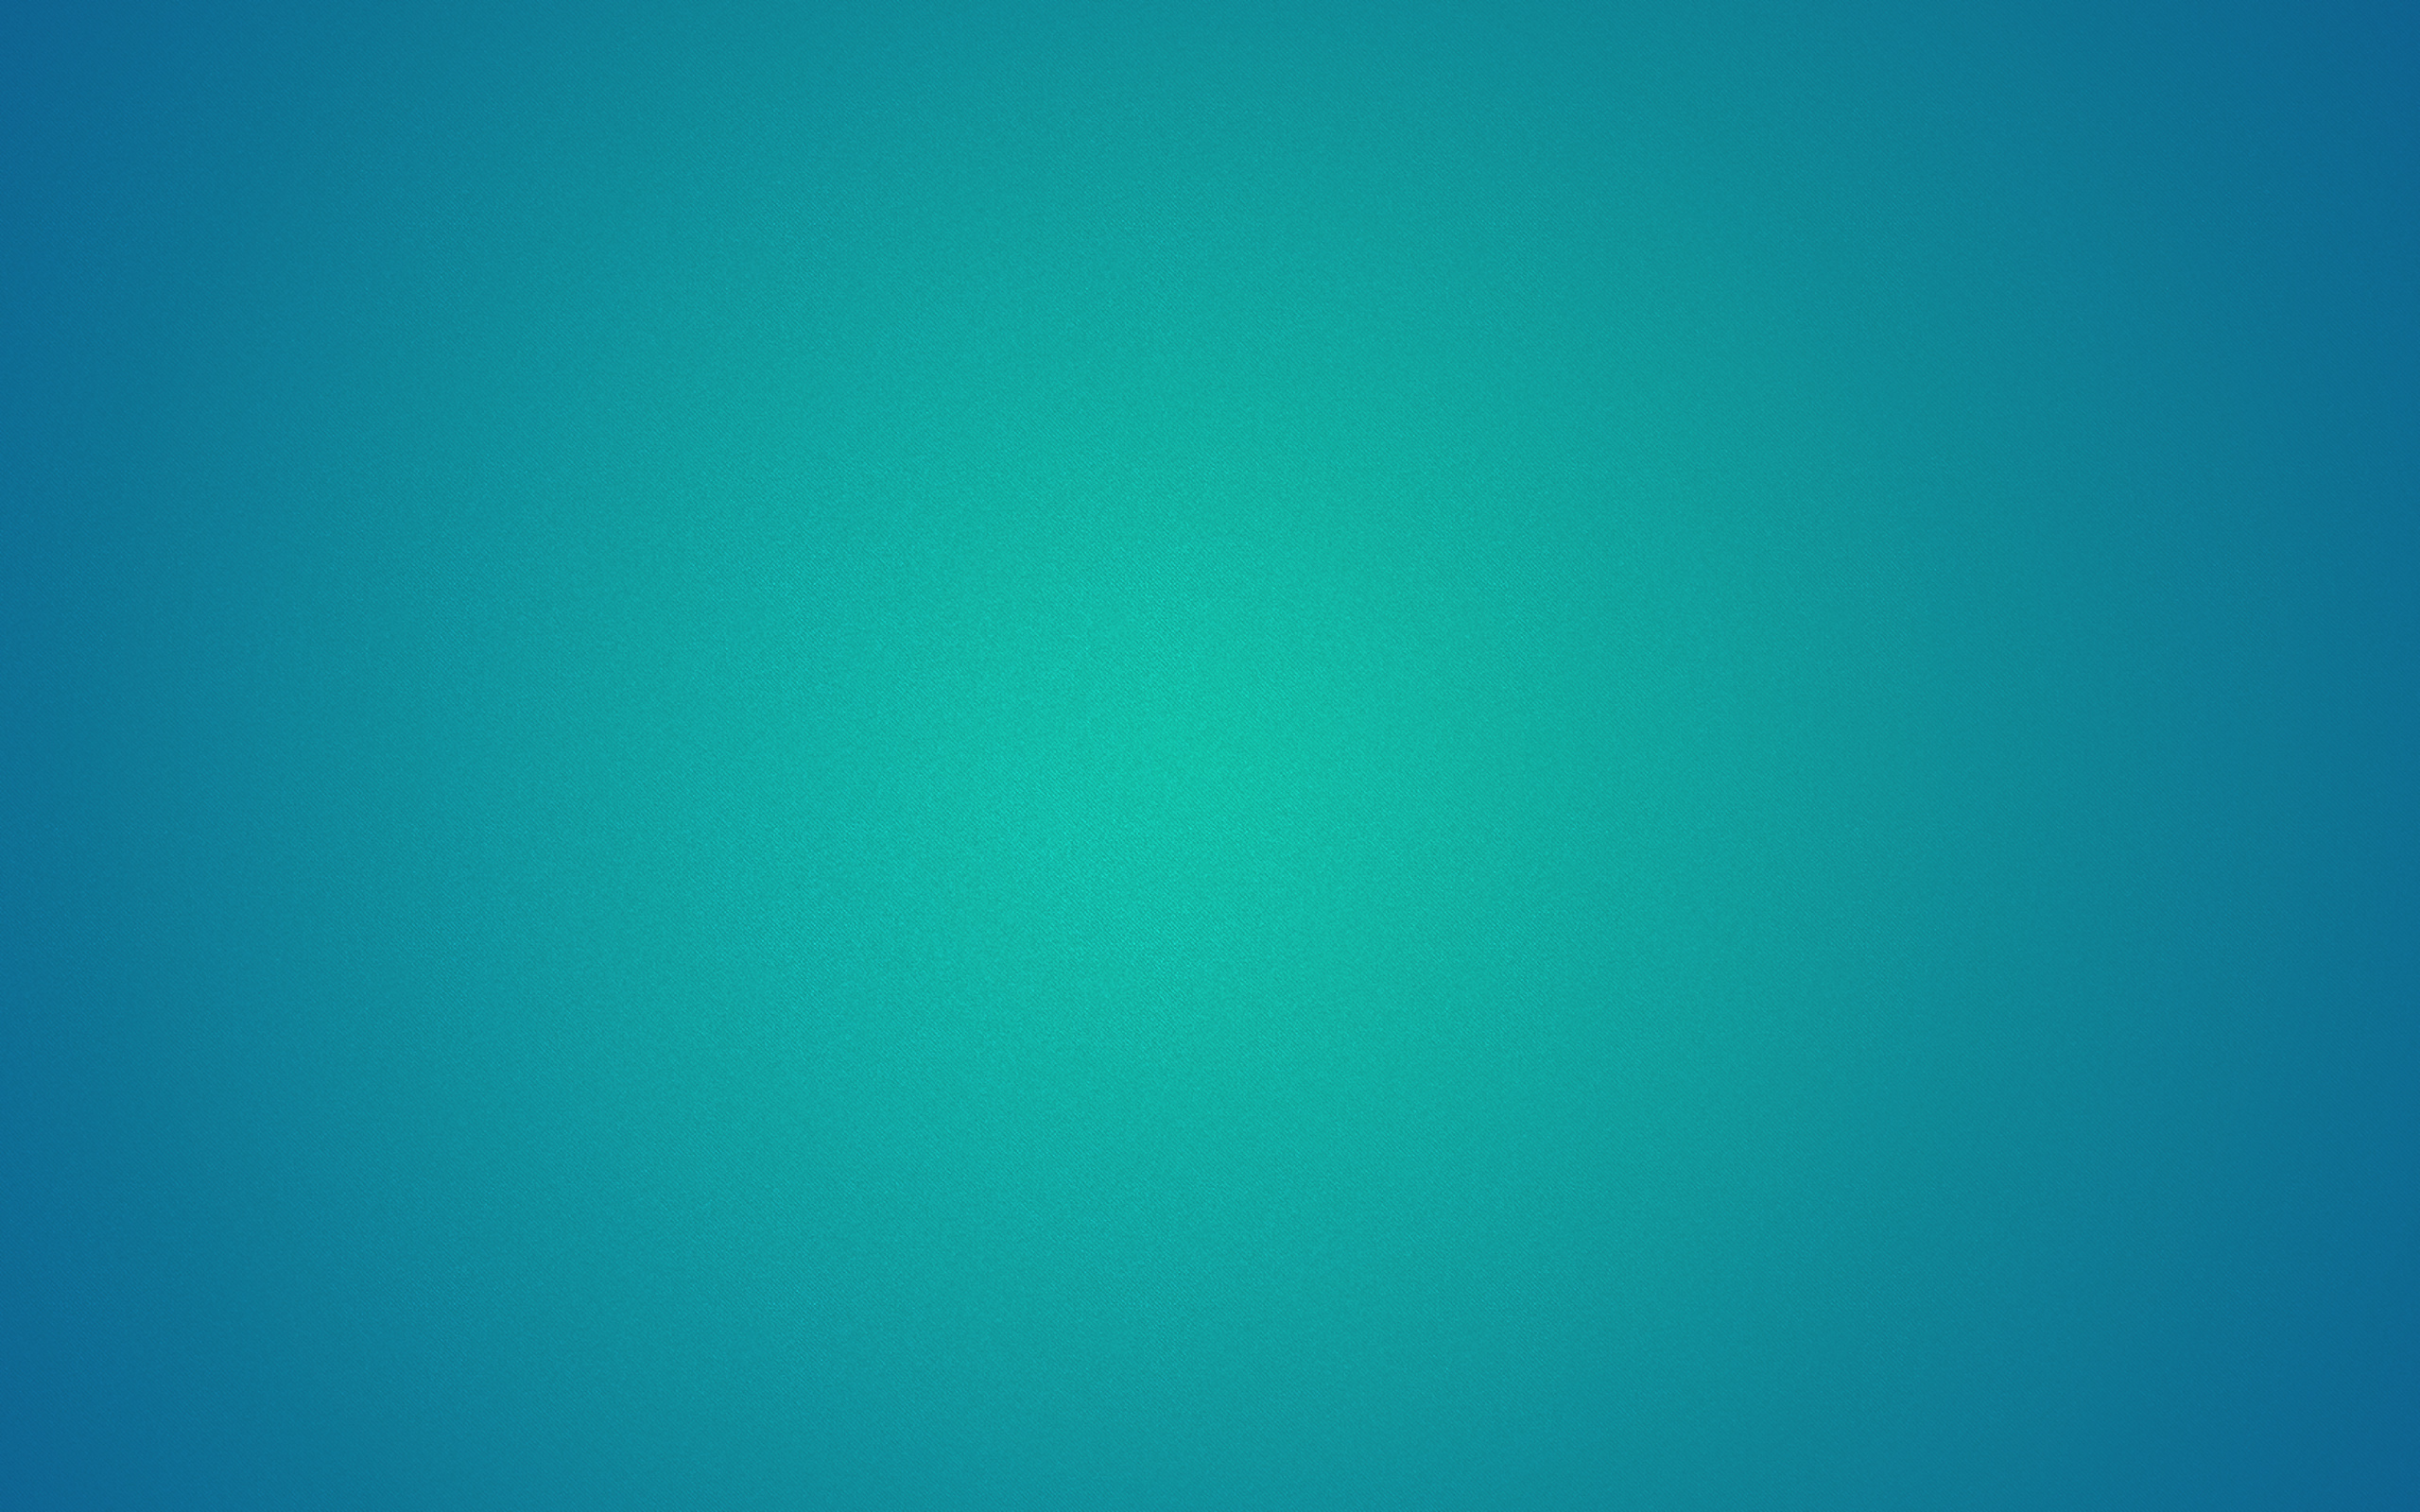 ubuntu gnome wallpaper,blue,green,aqua,turquoise,teal